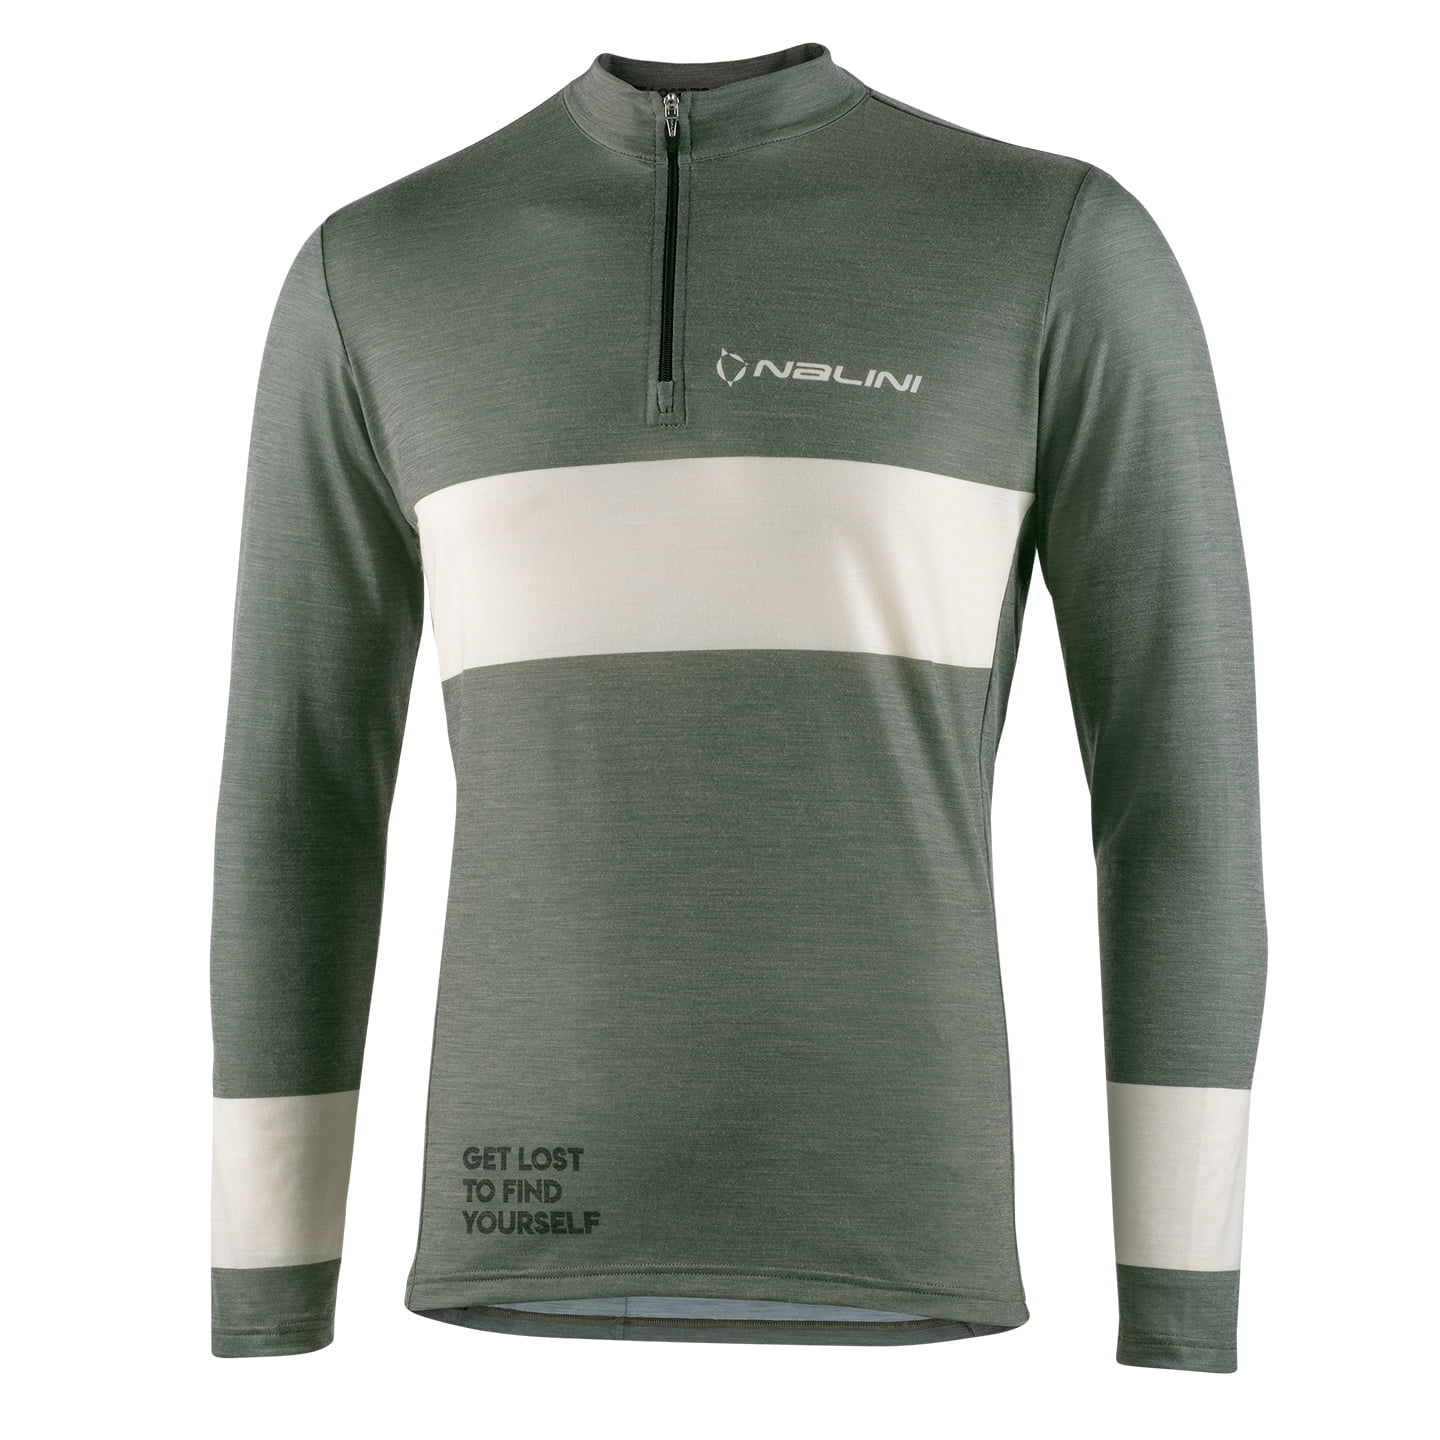 NALINI New Wool Long Sleeve Jersey Bikeshirt, for men, size 2XL, Cycling jersey, Cycle clothing